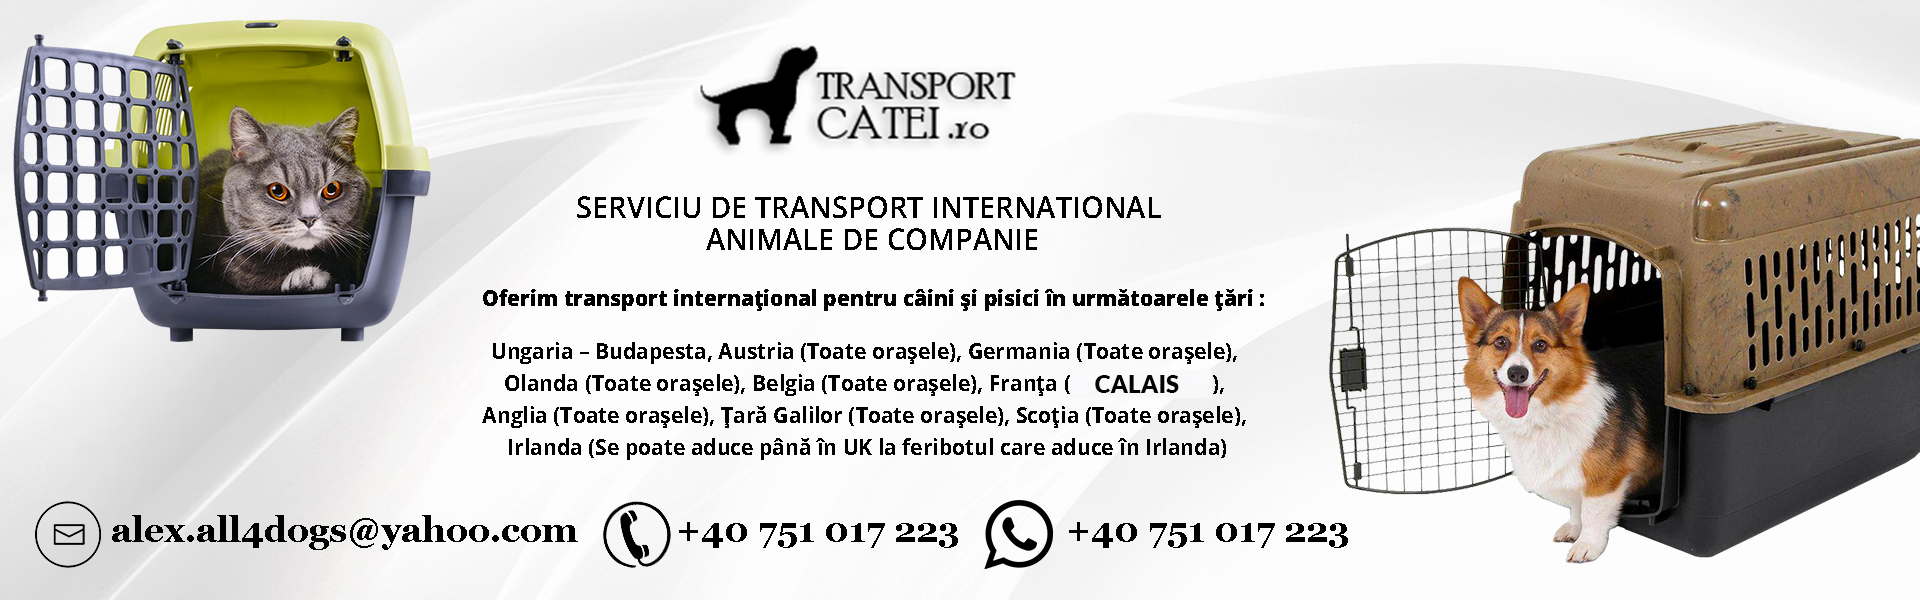 Transport animale de companie international